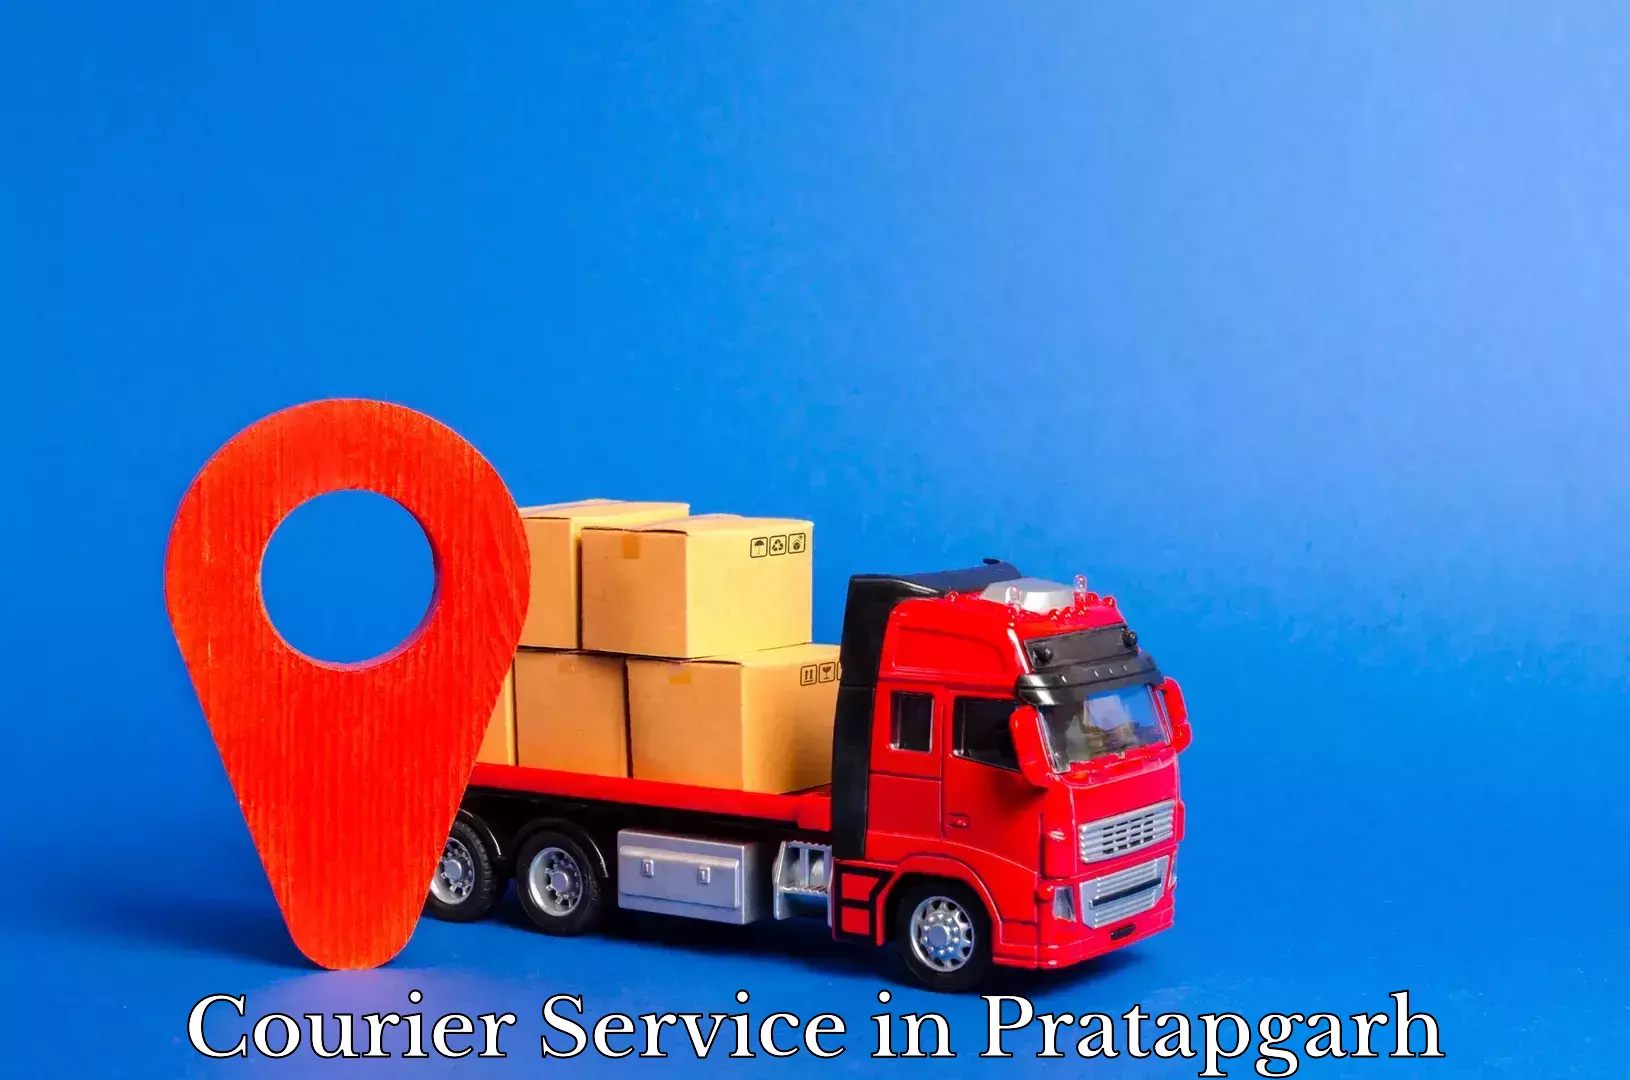 Courier service partnerships in Pratapgarh